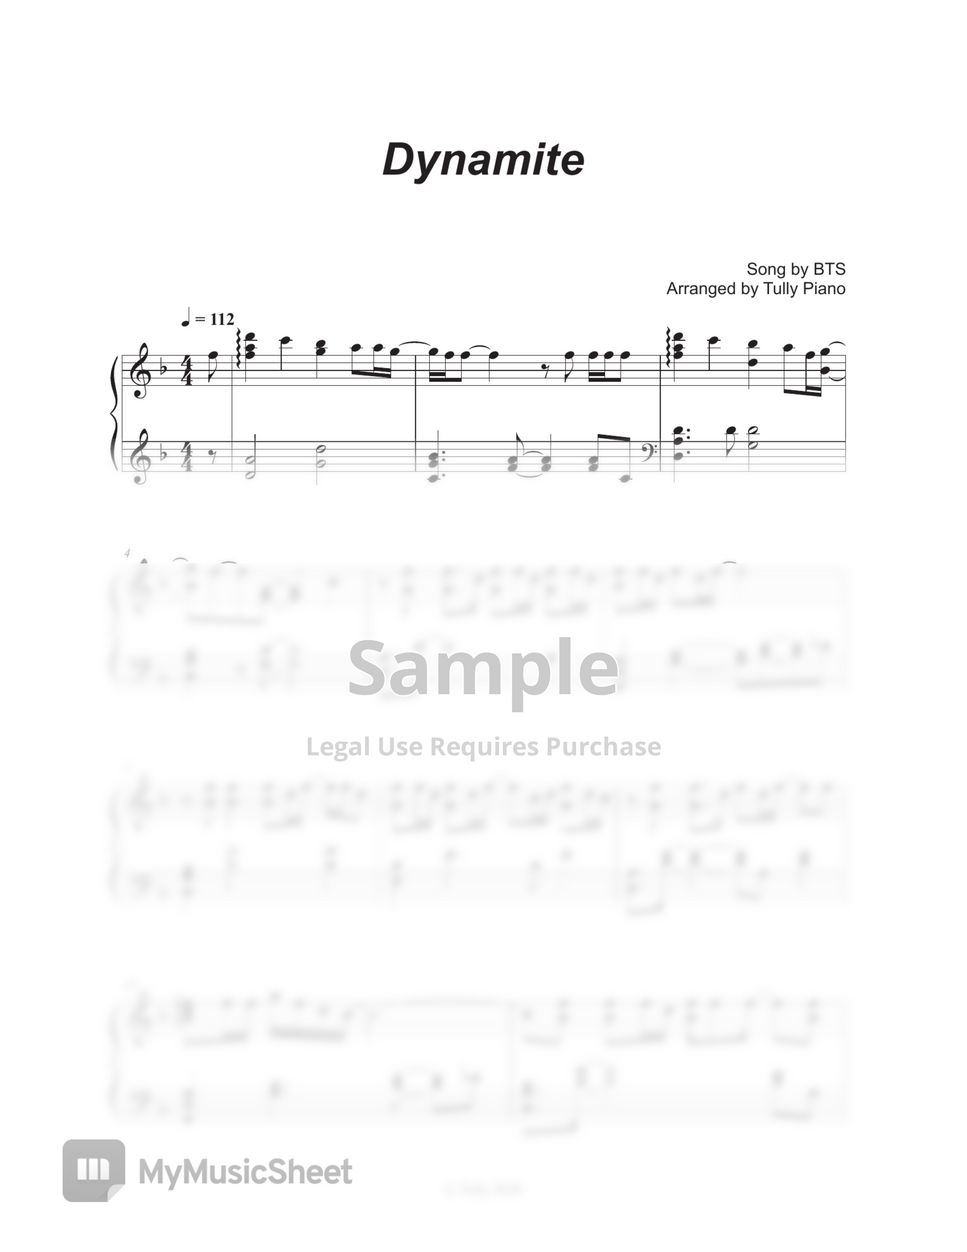 BTS (방탄소년단) - Dynamite (Easy Key) by Tully Piano